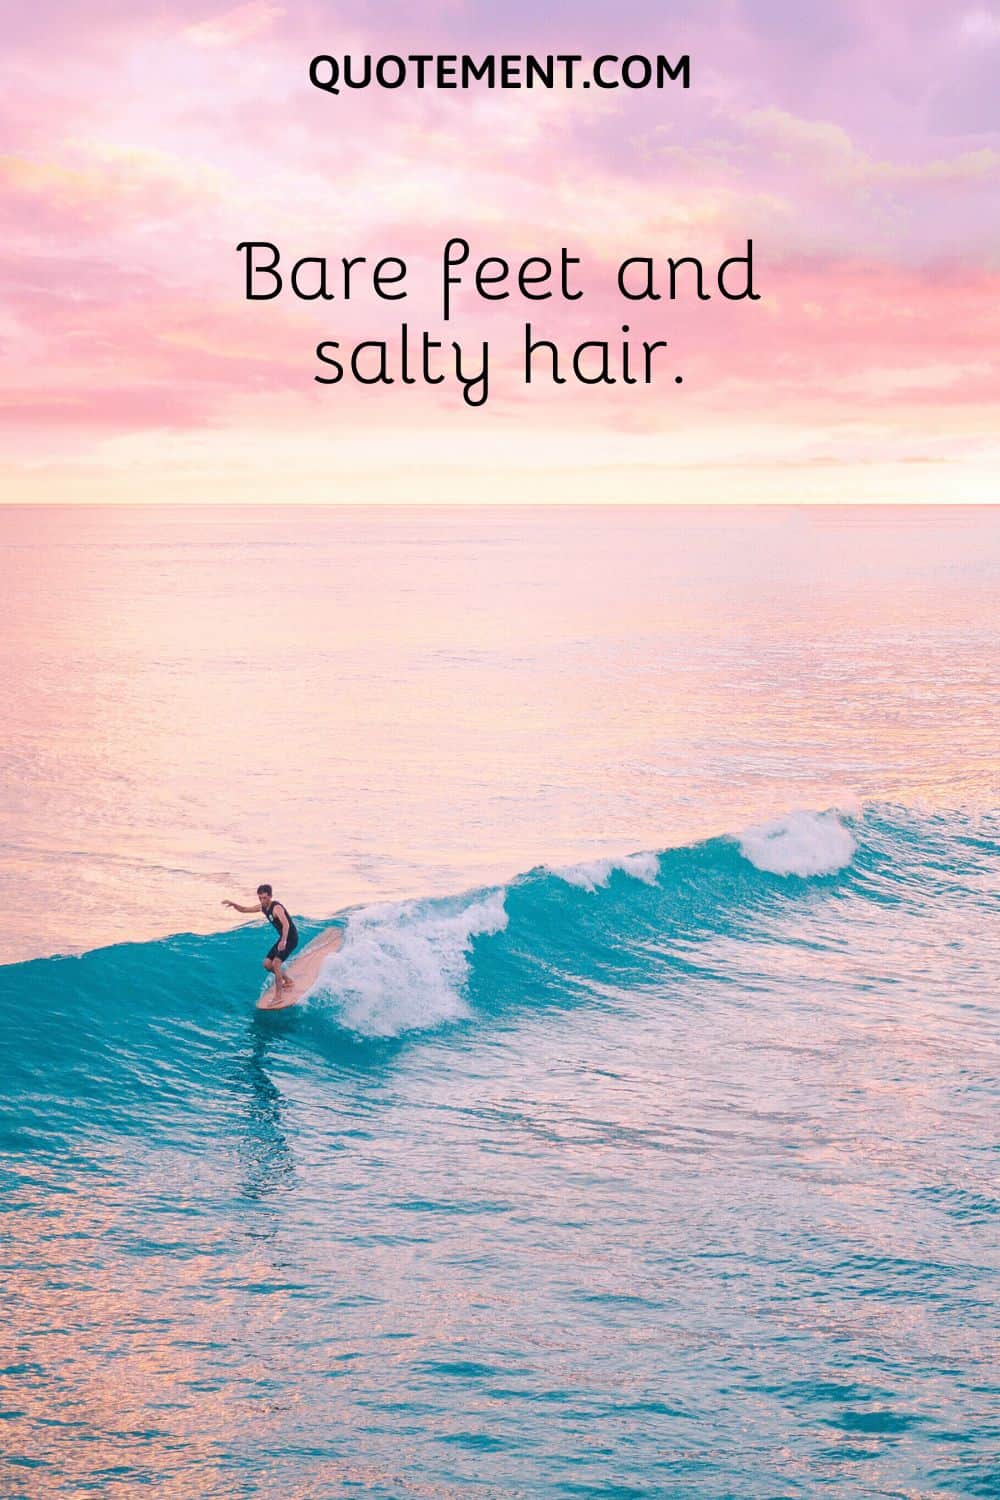 Bare feet and salty hair.